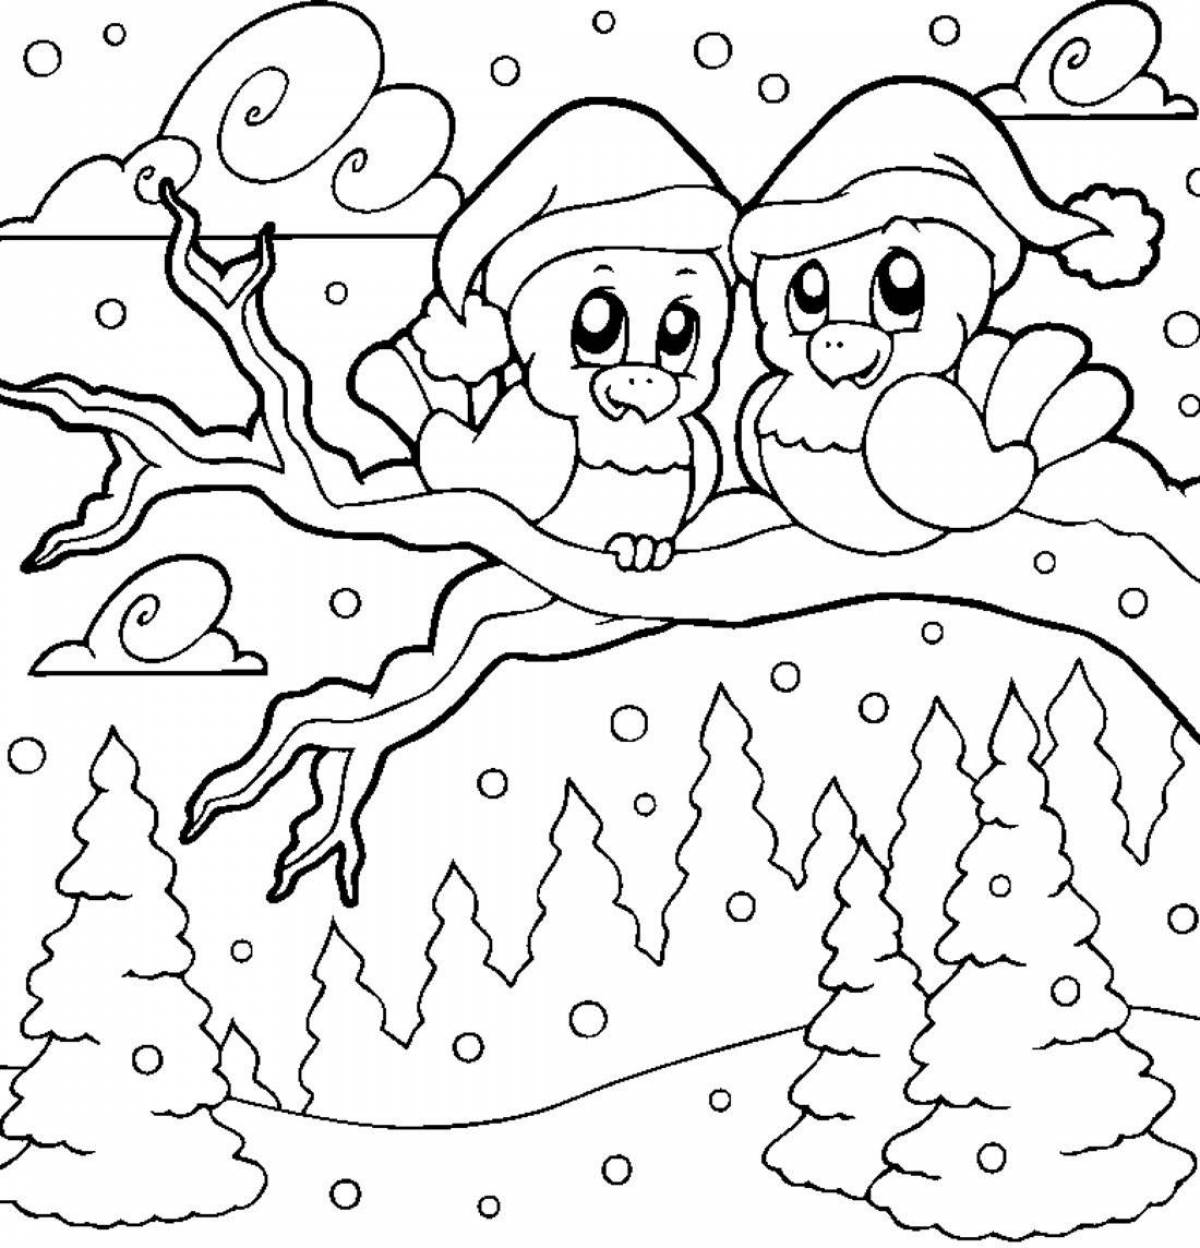 Sky winter landscape coloring book for kids